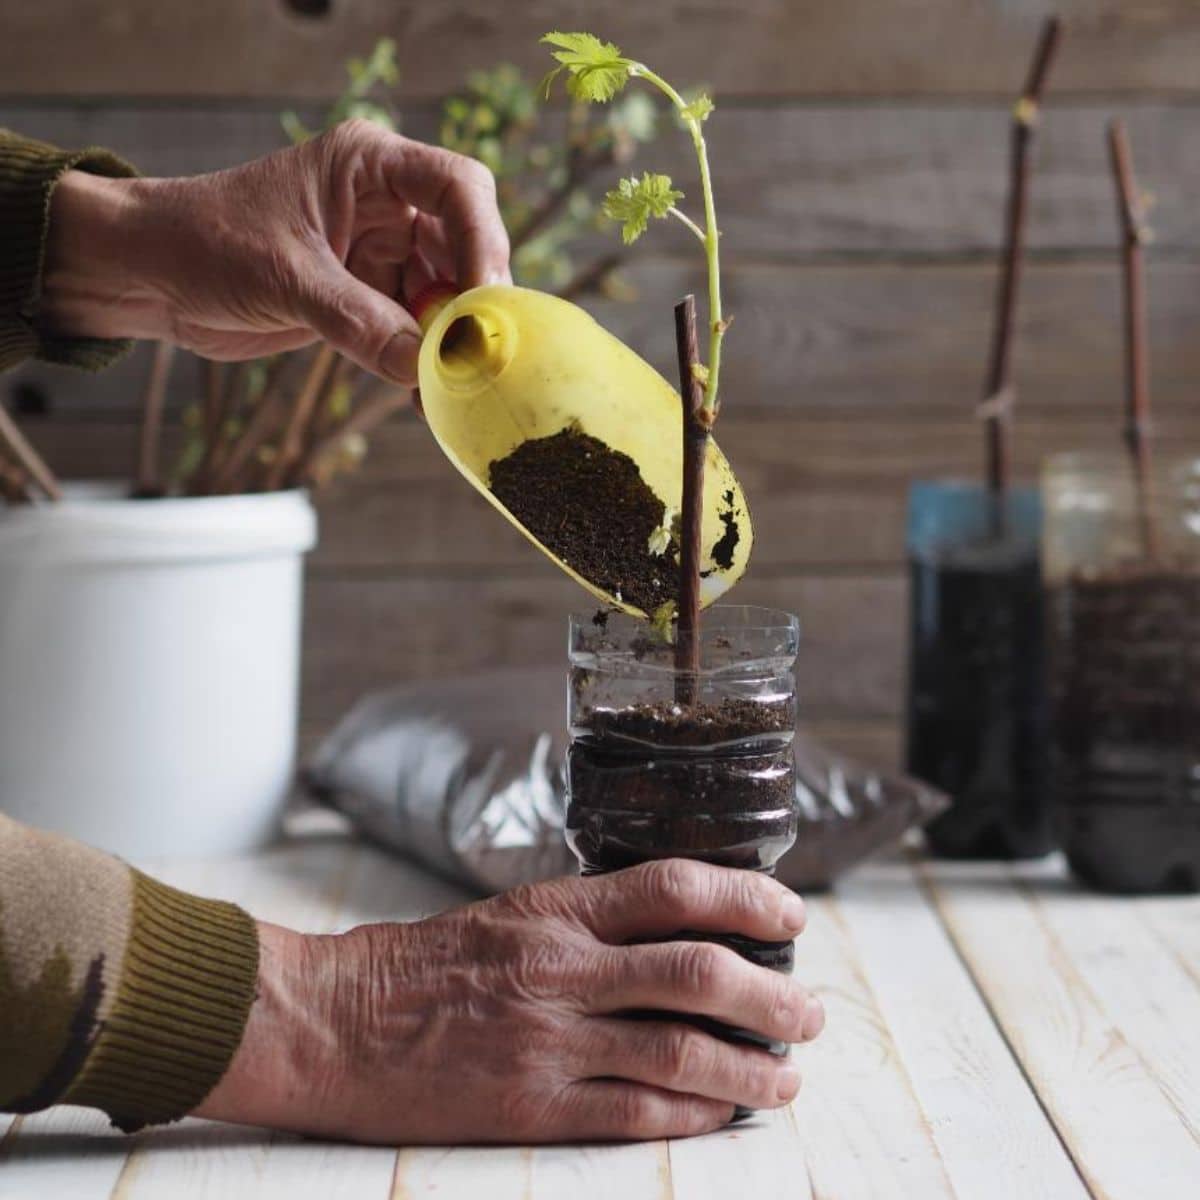 A gardener planting a grape cutting in a plastic bottle.